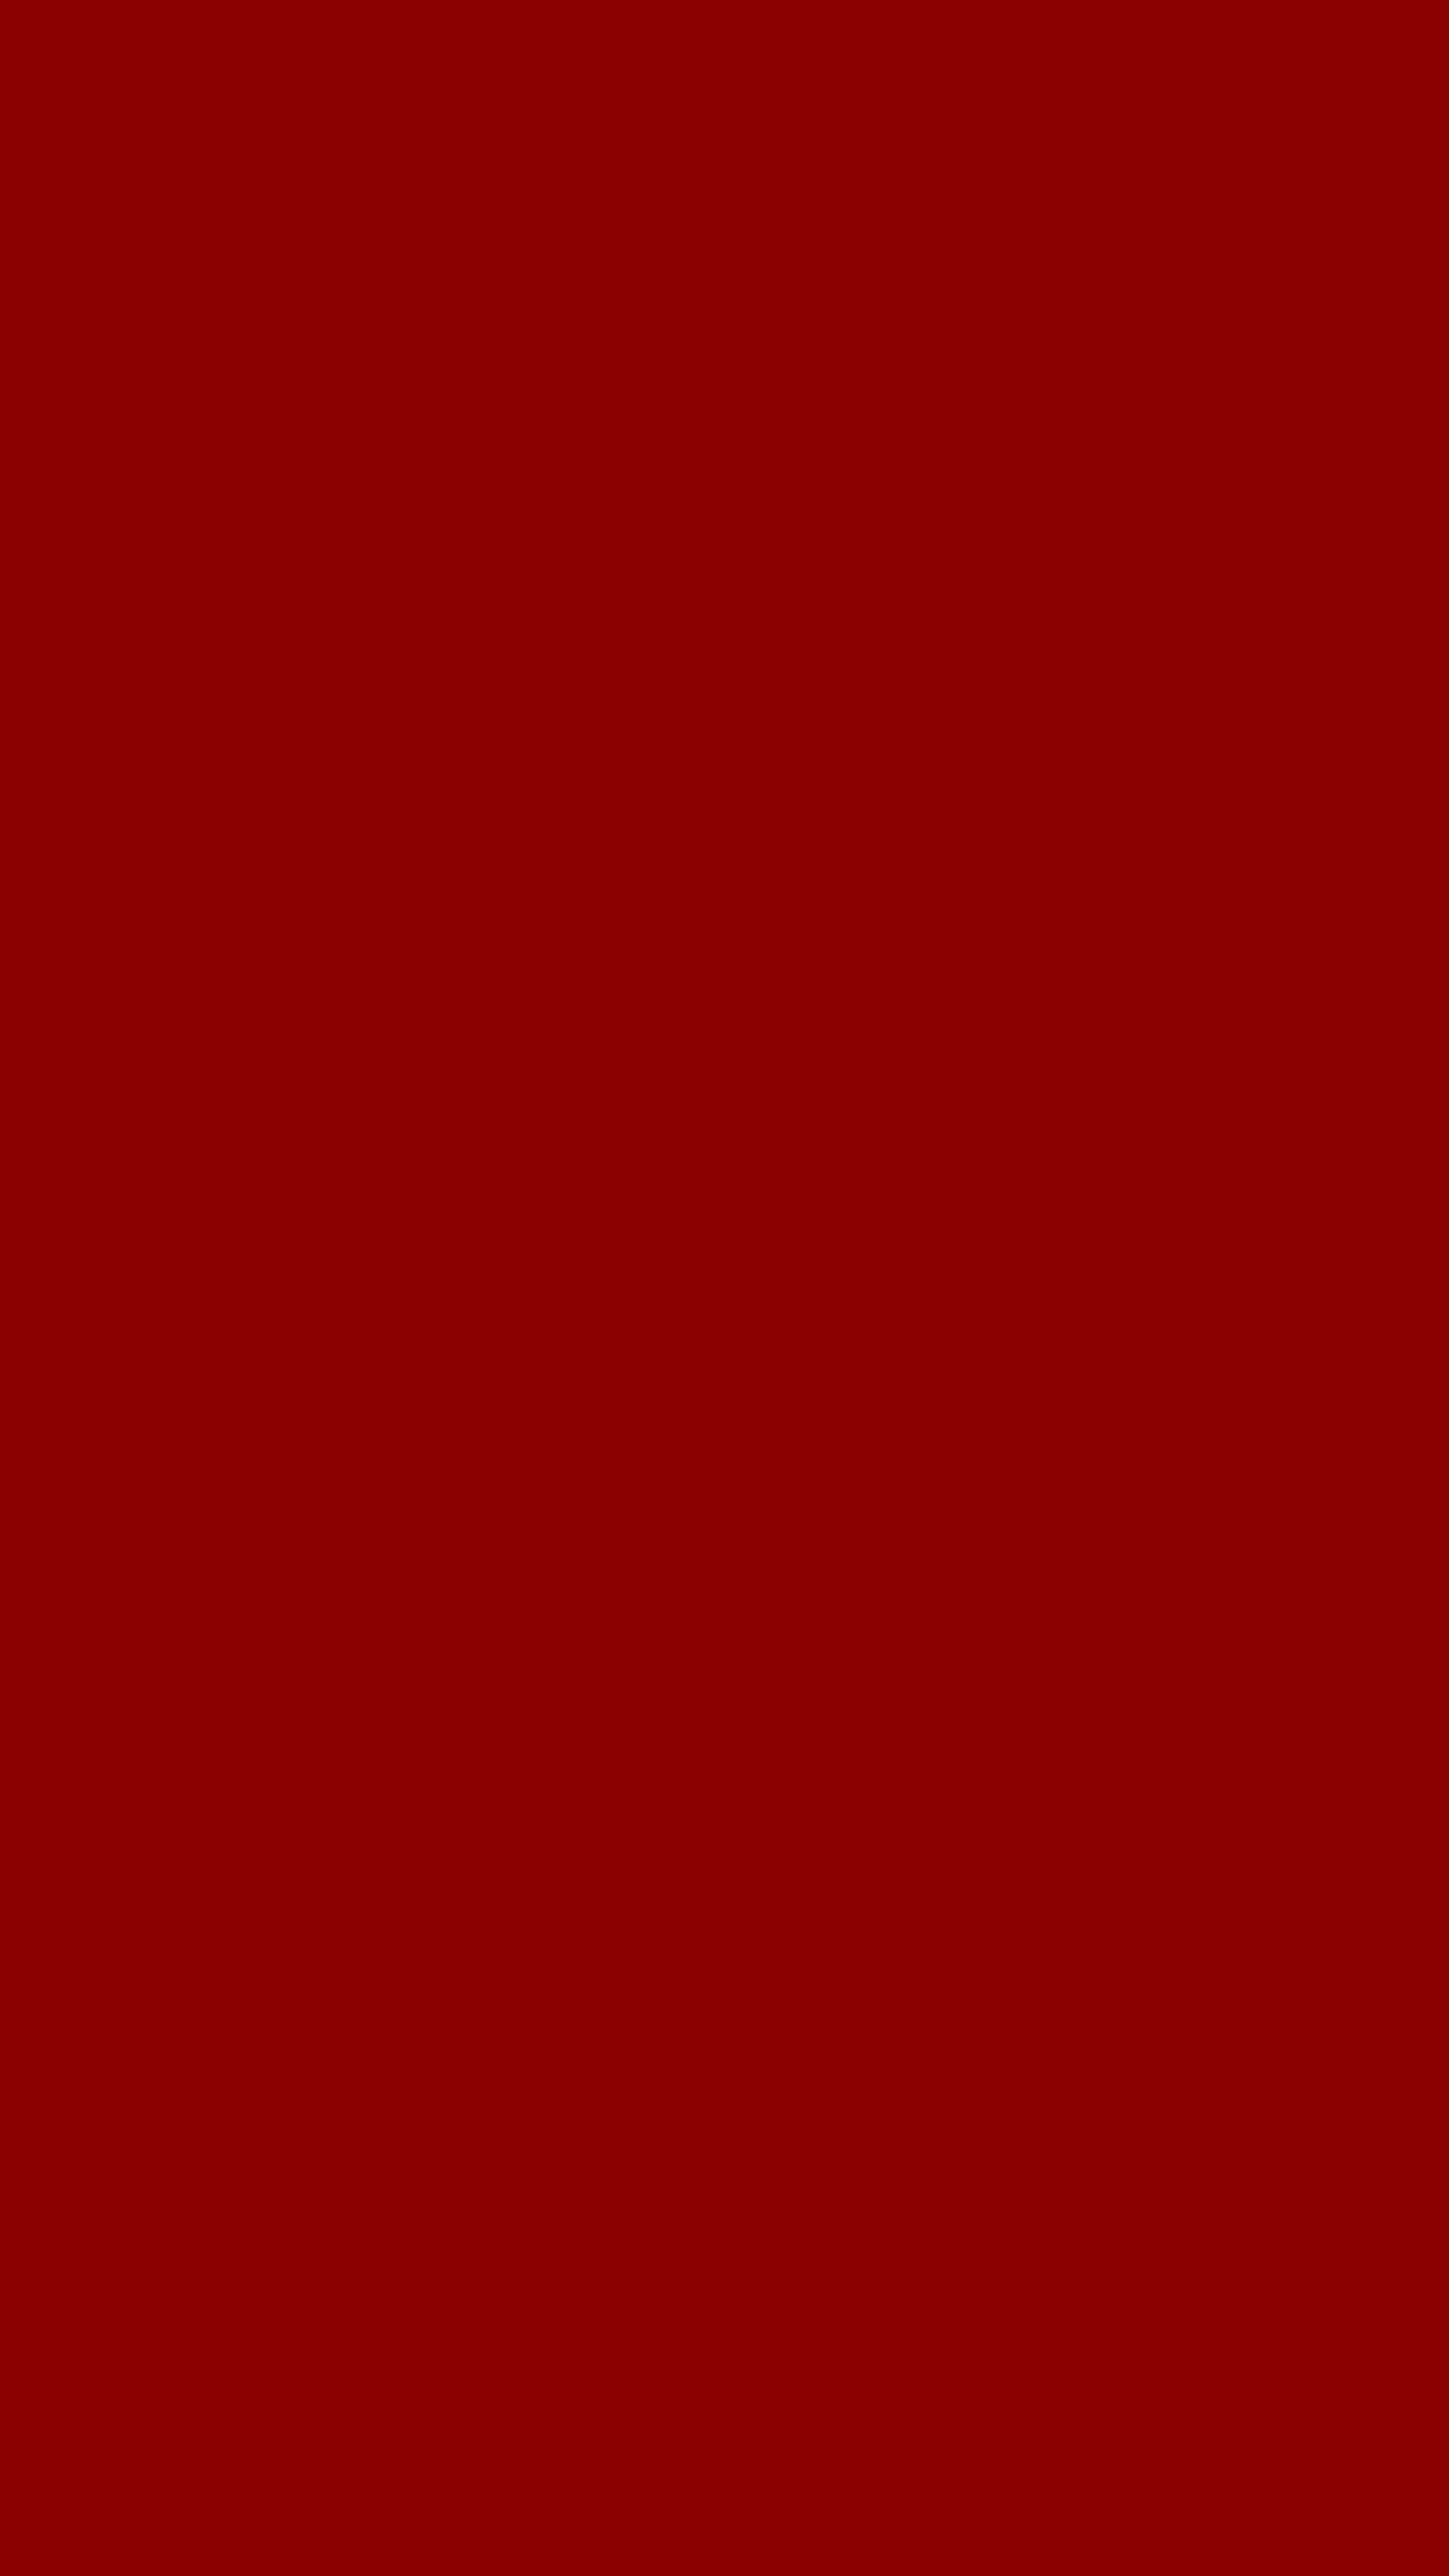 Full Hd Red Colour Wallpaper Hd  1080x1920 Wallpaper  teahubio